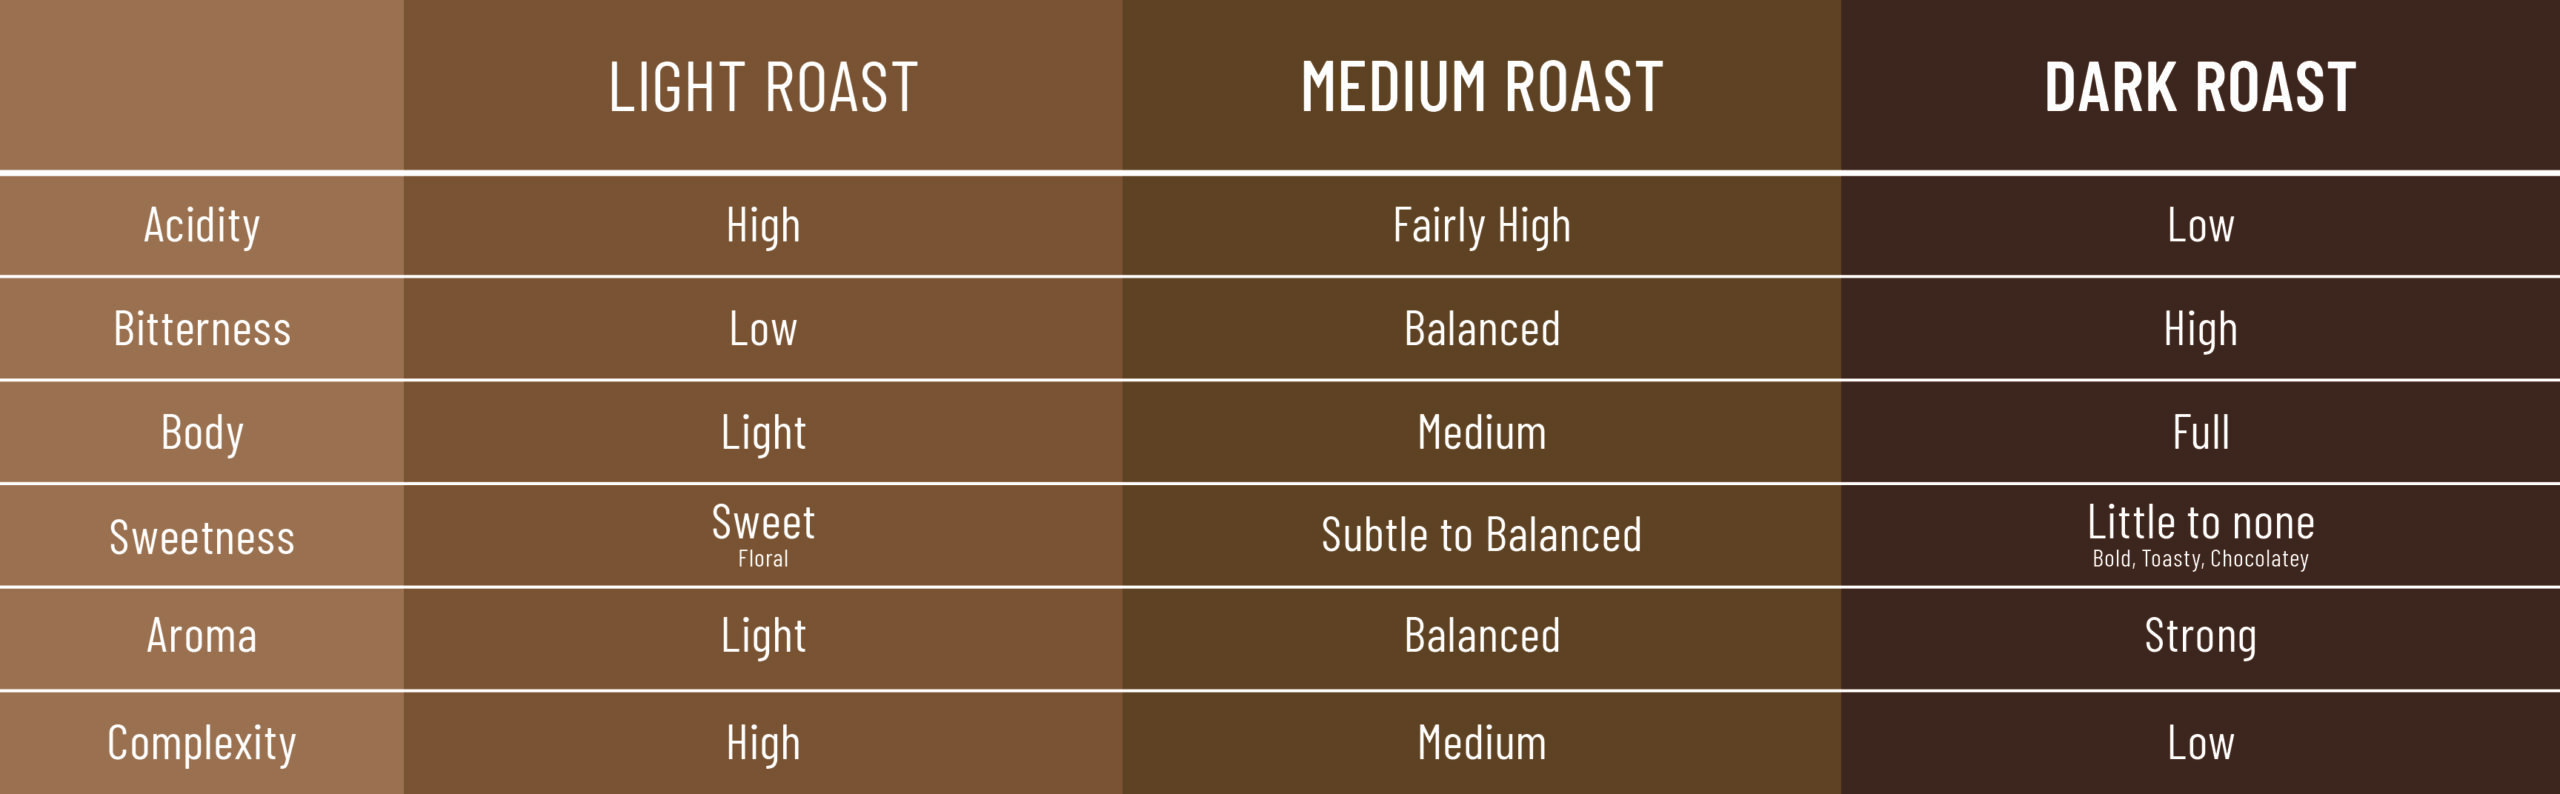 light roast vs medium roast vs dark roast